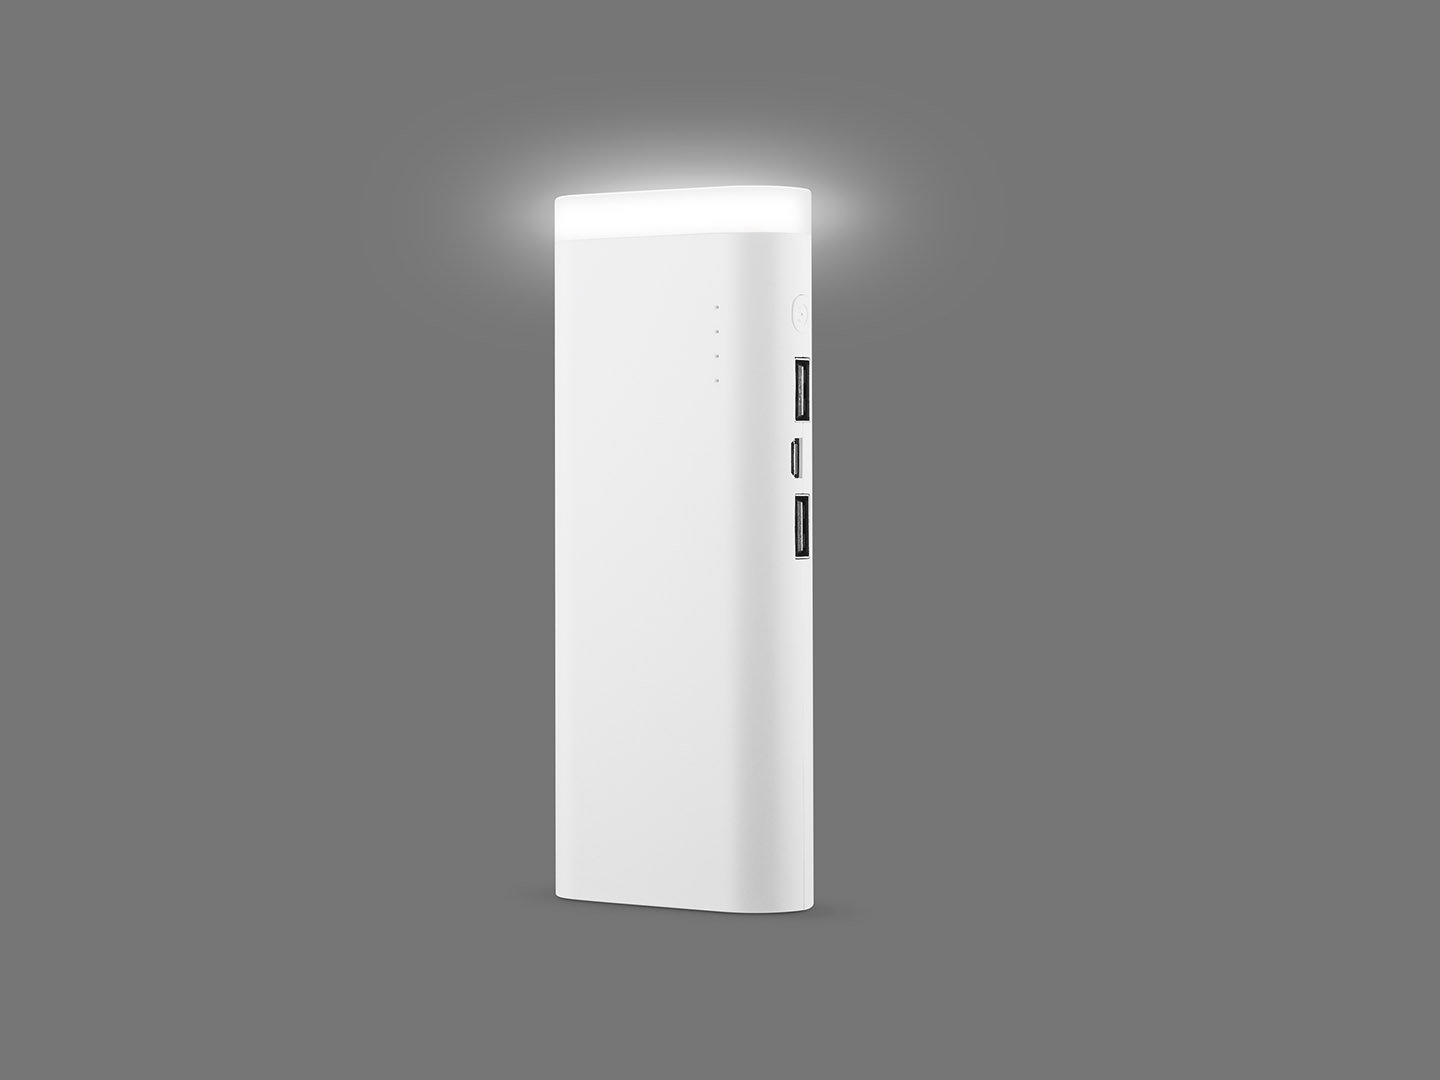 NEO NL150 Портативный аккумулятор
15 000 мАч • 2 USB • Мощный LED фонарь